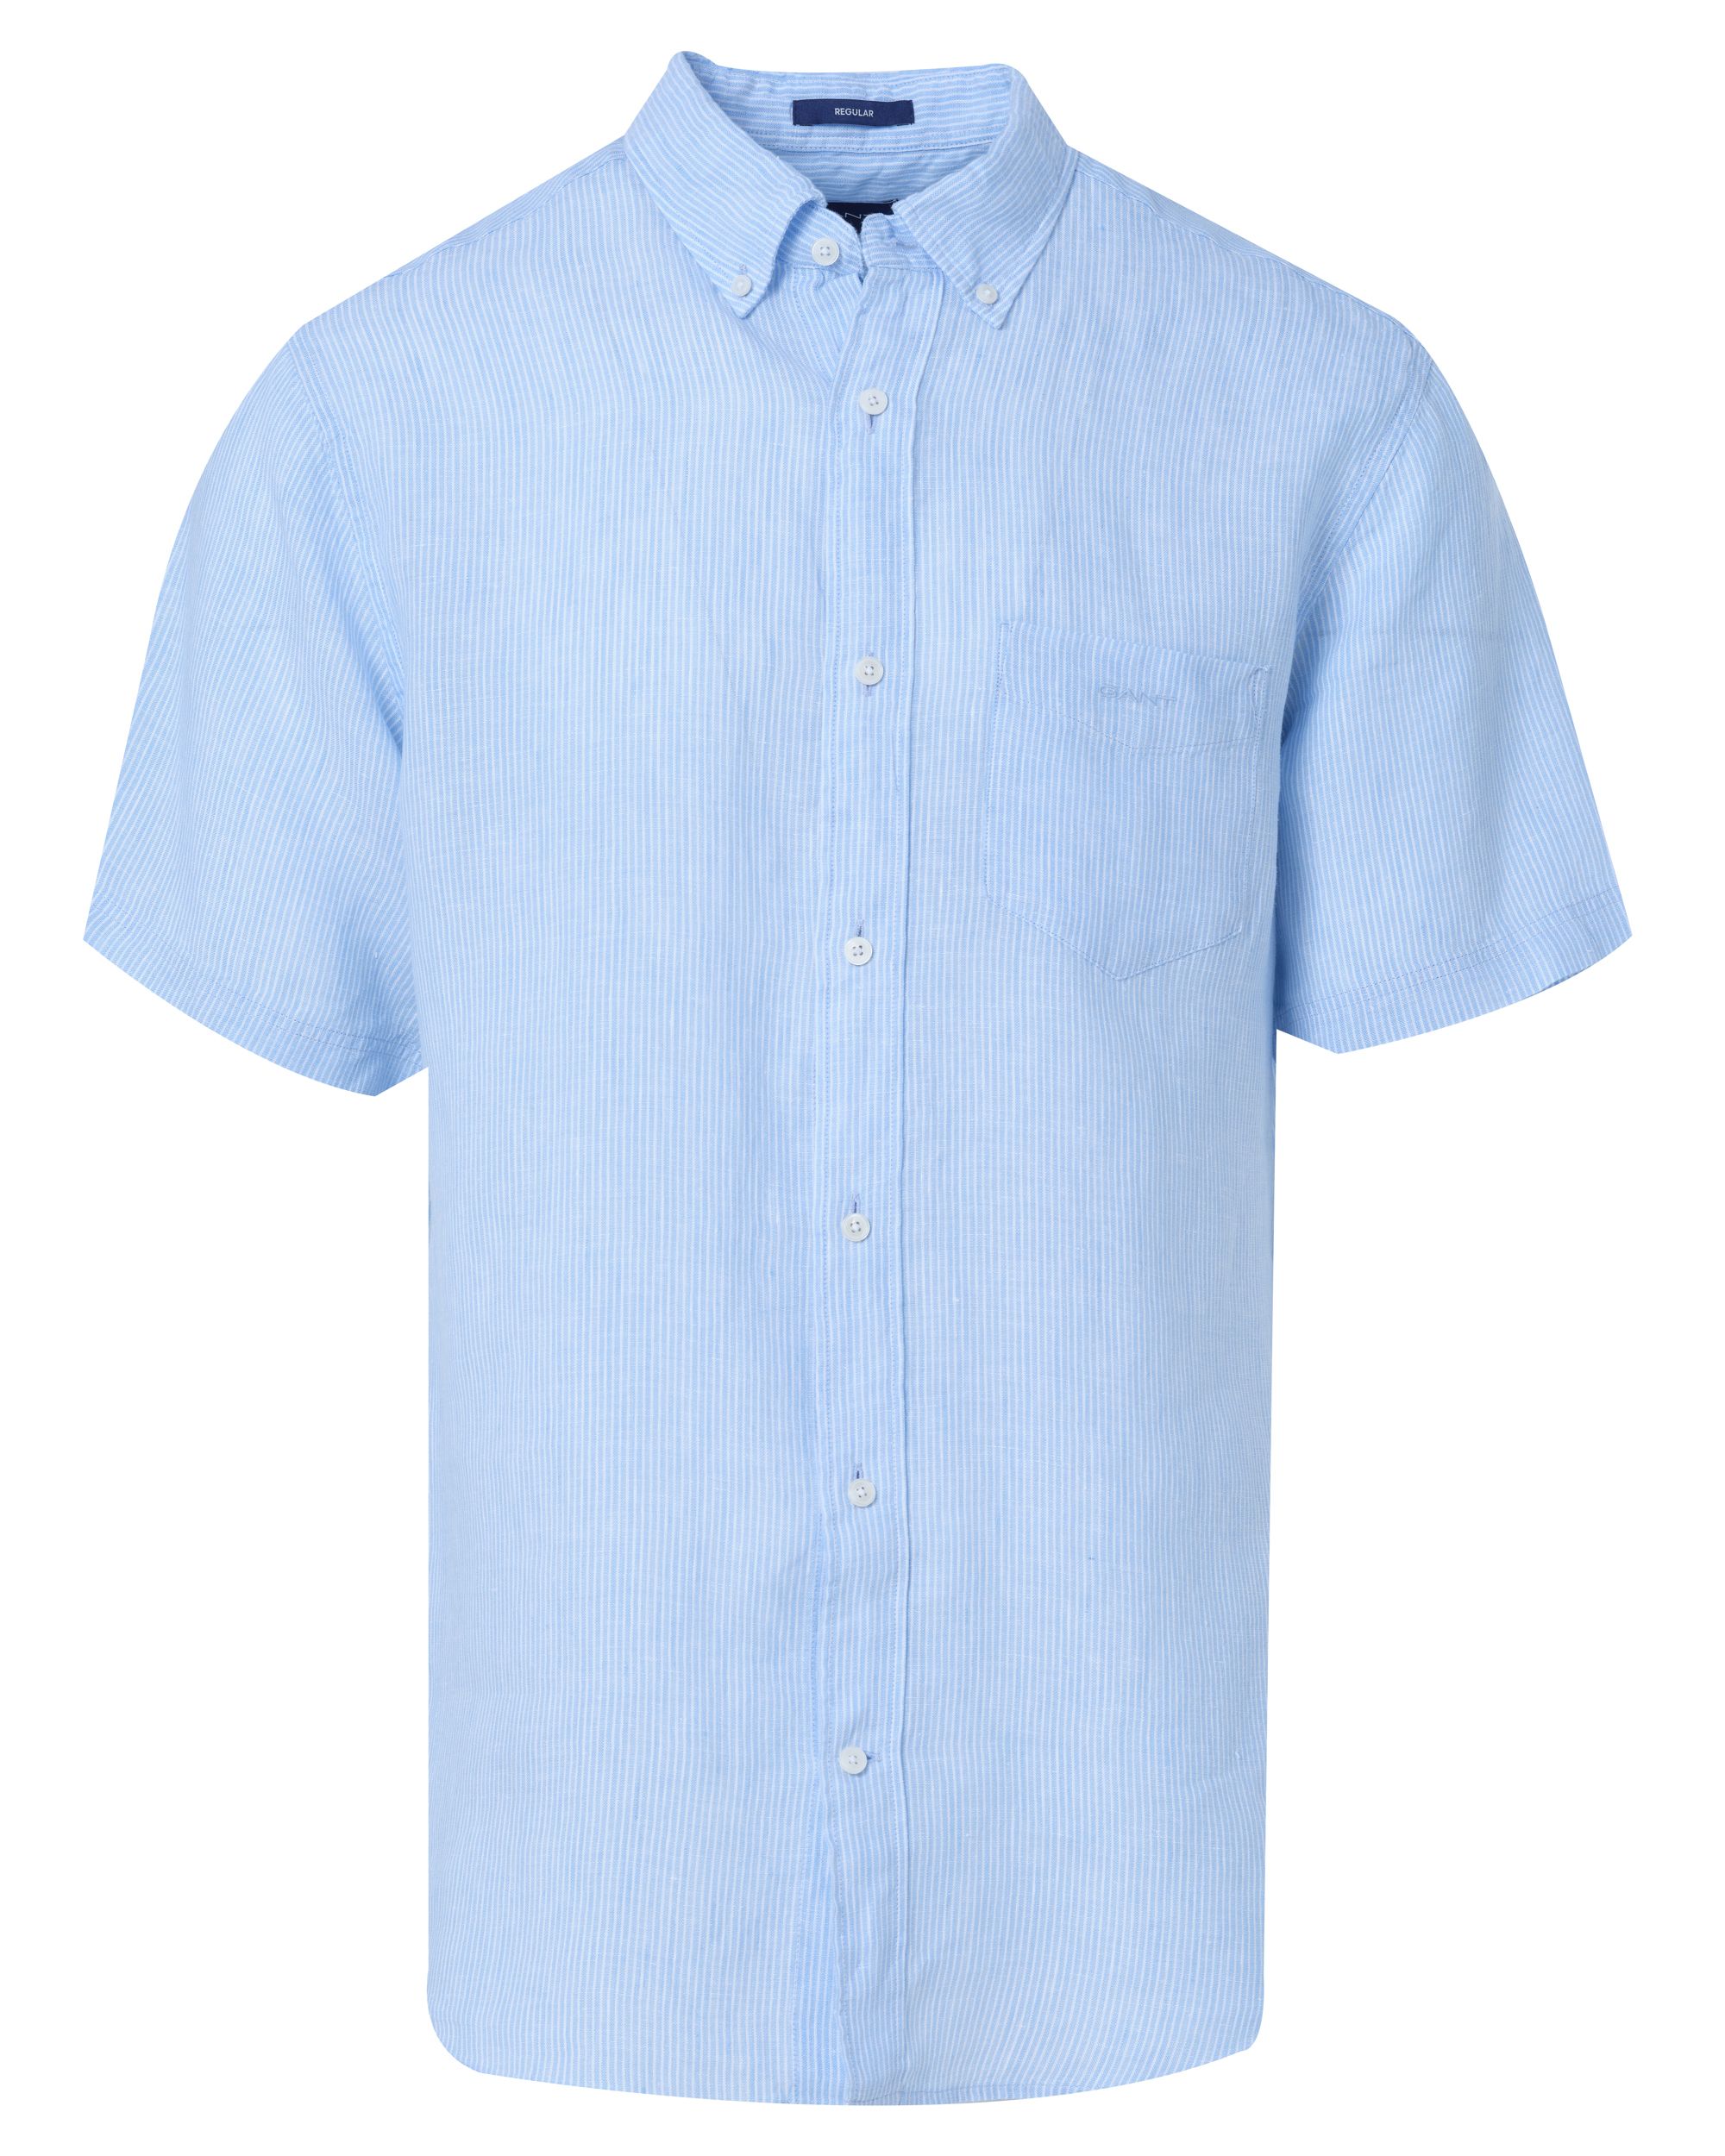 GANT Casual Overhemd KM Blauw streep 083939-001-L